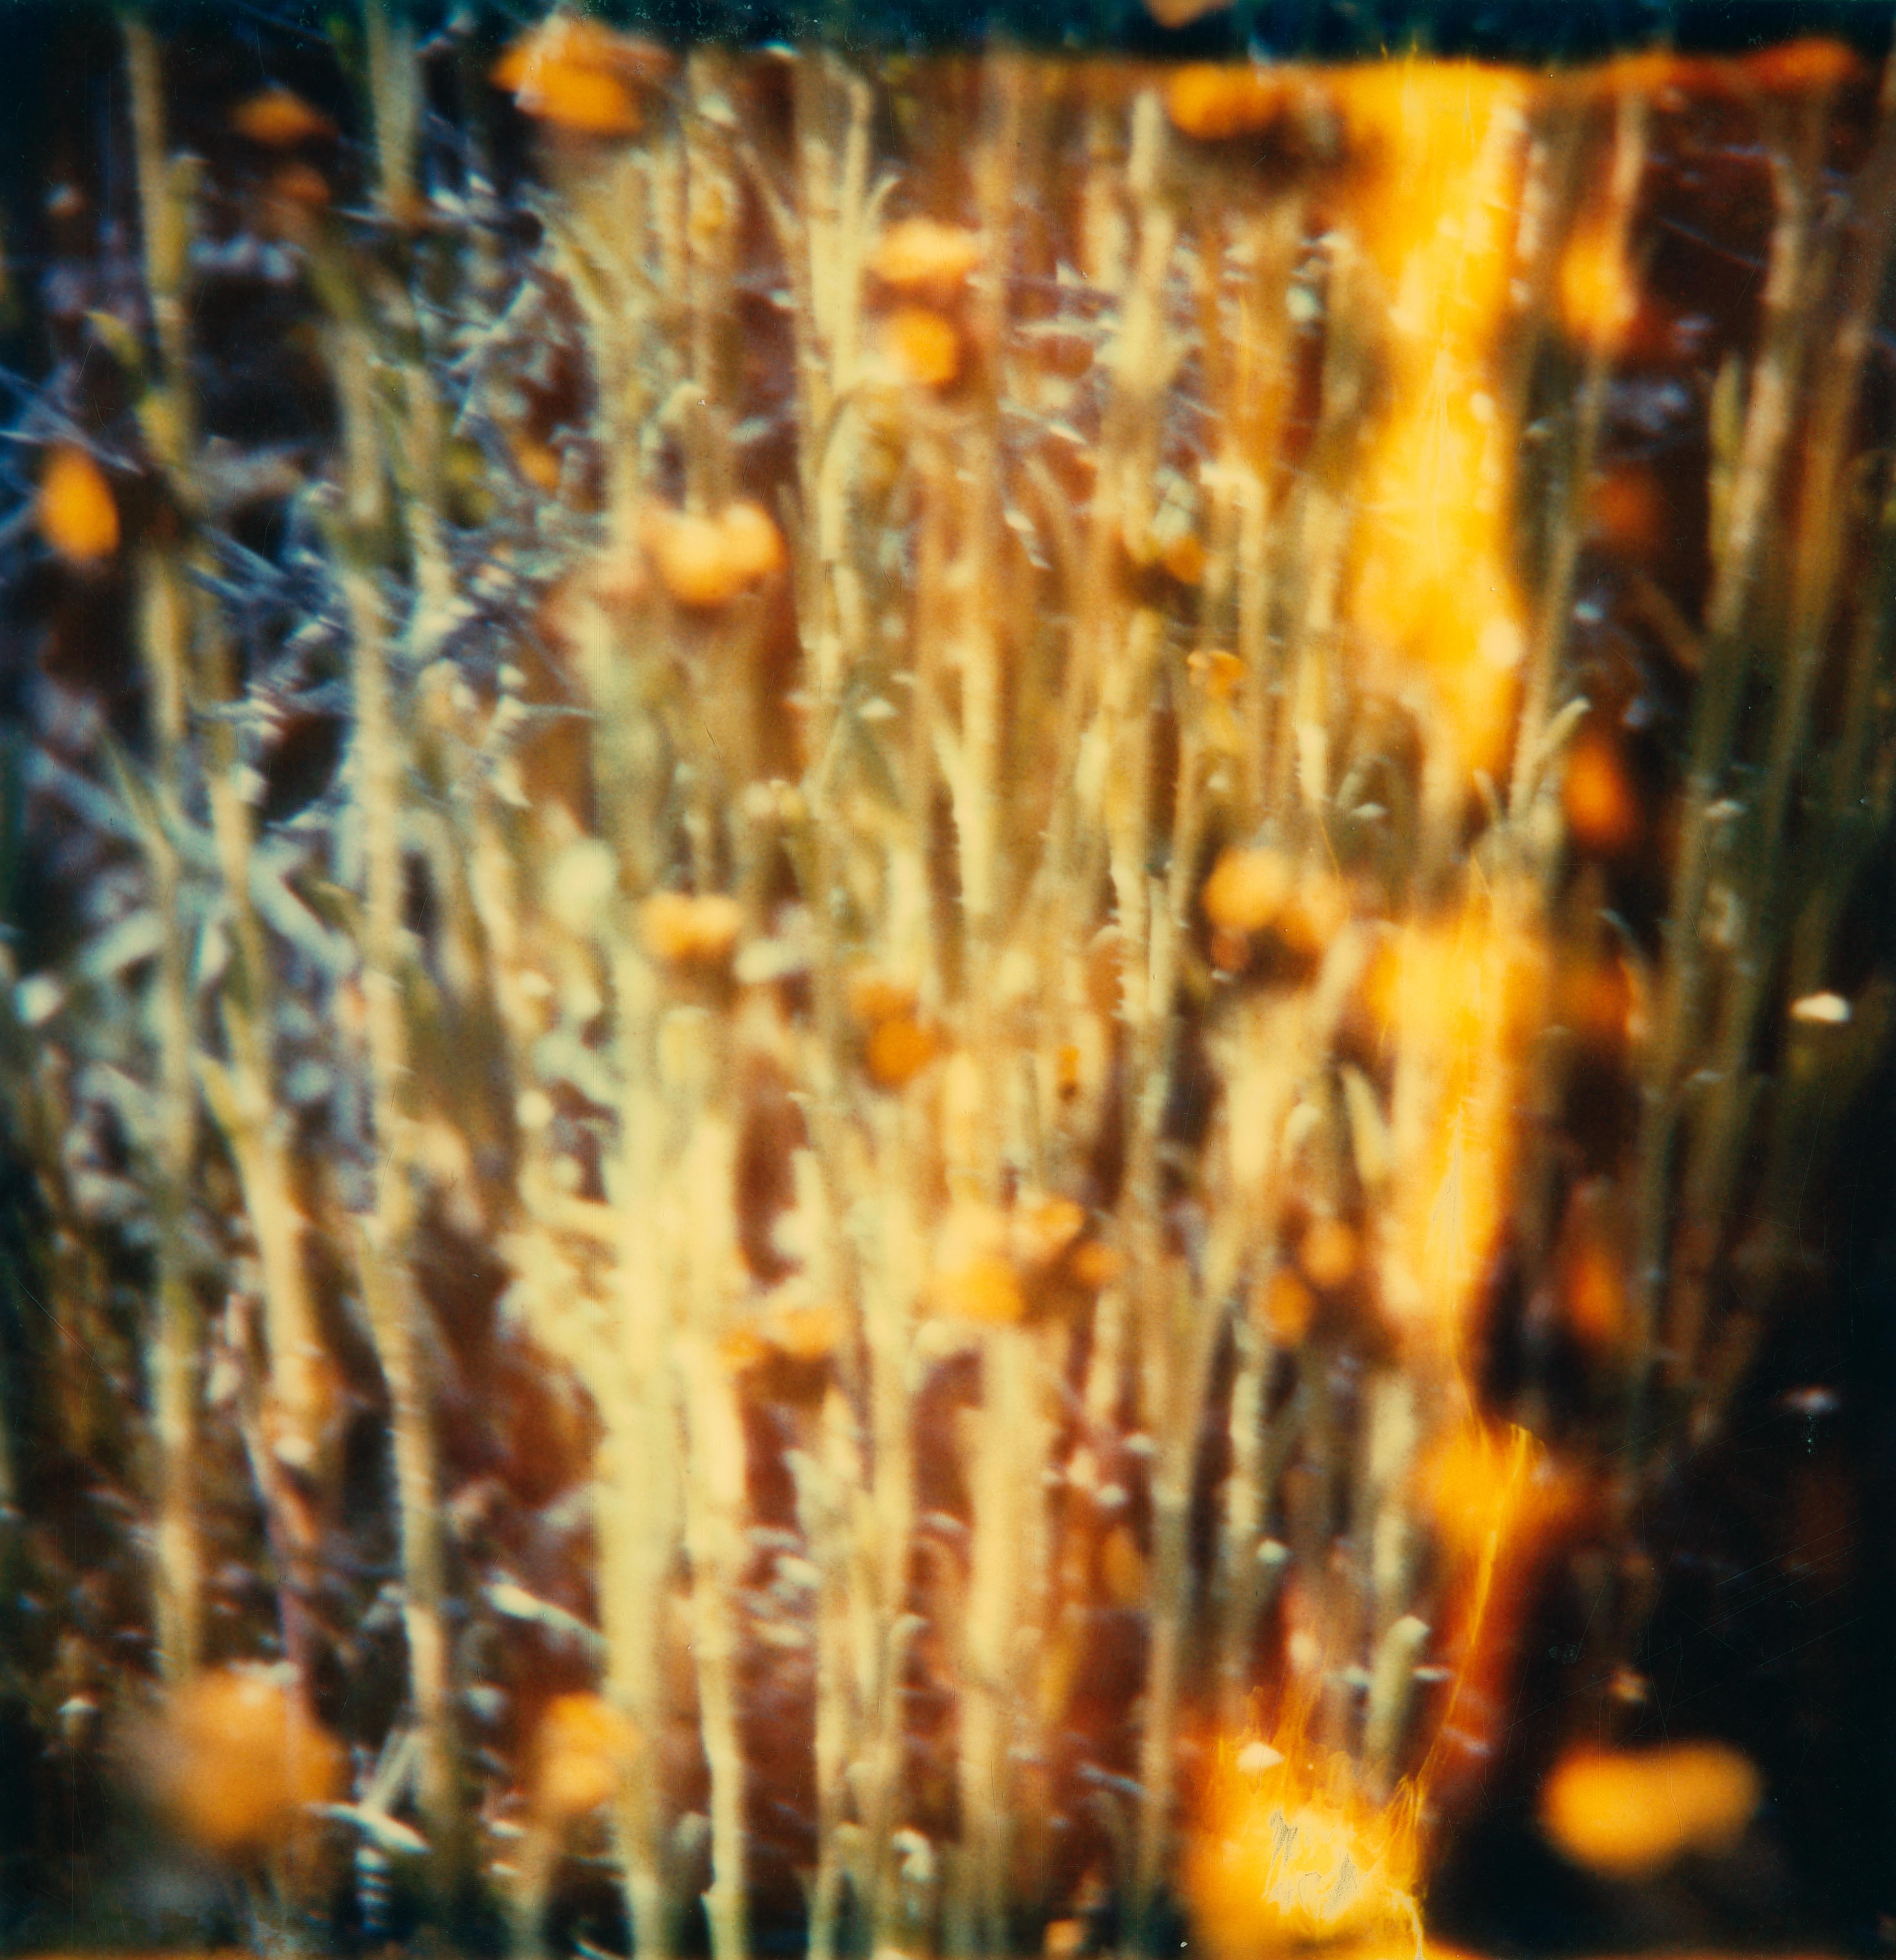 Stefanie Schneider Color Photograph - Jean Baptist's Dream Sequence - part 5 - (Sidewinder) - Polaroid, Contemporary